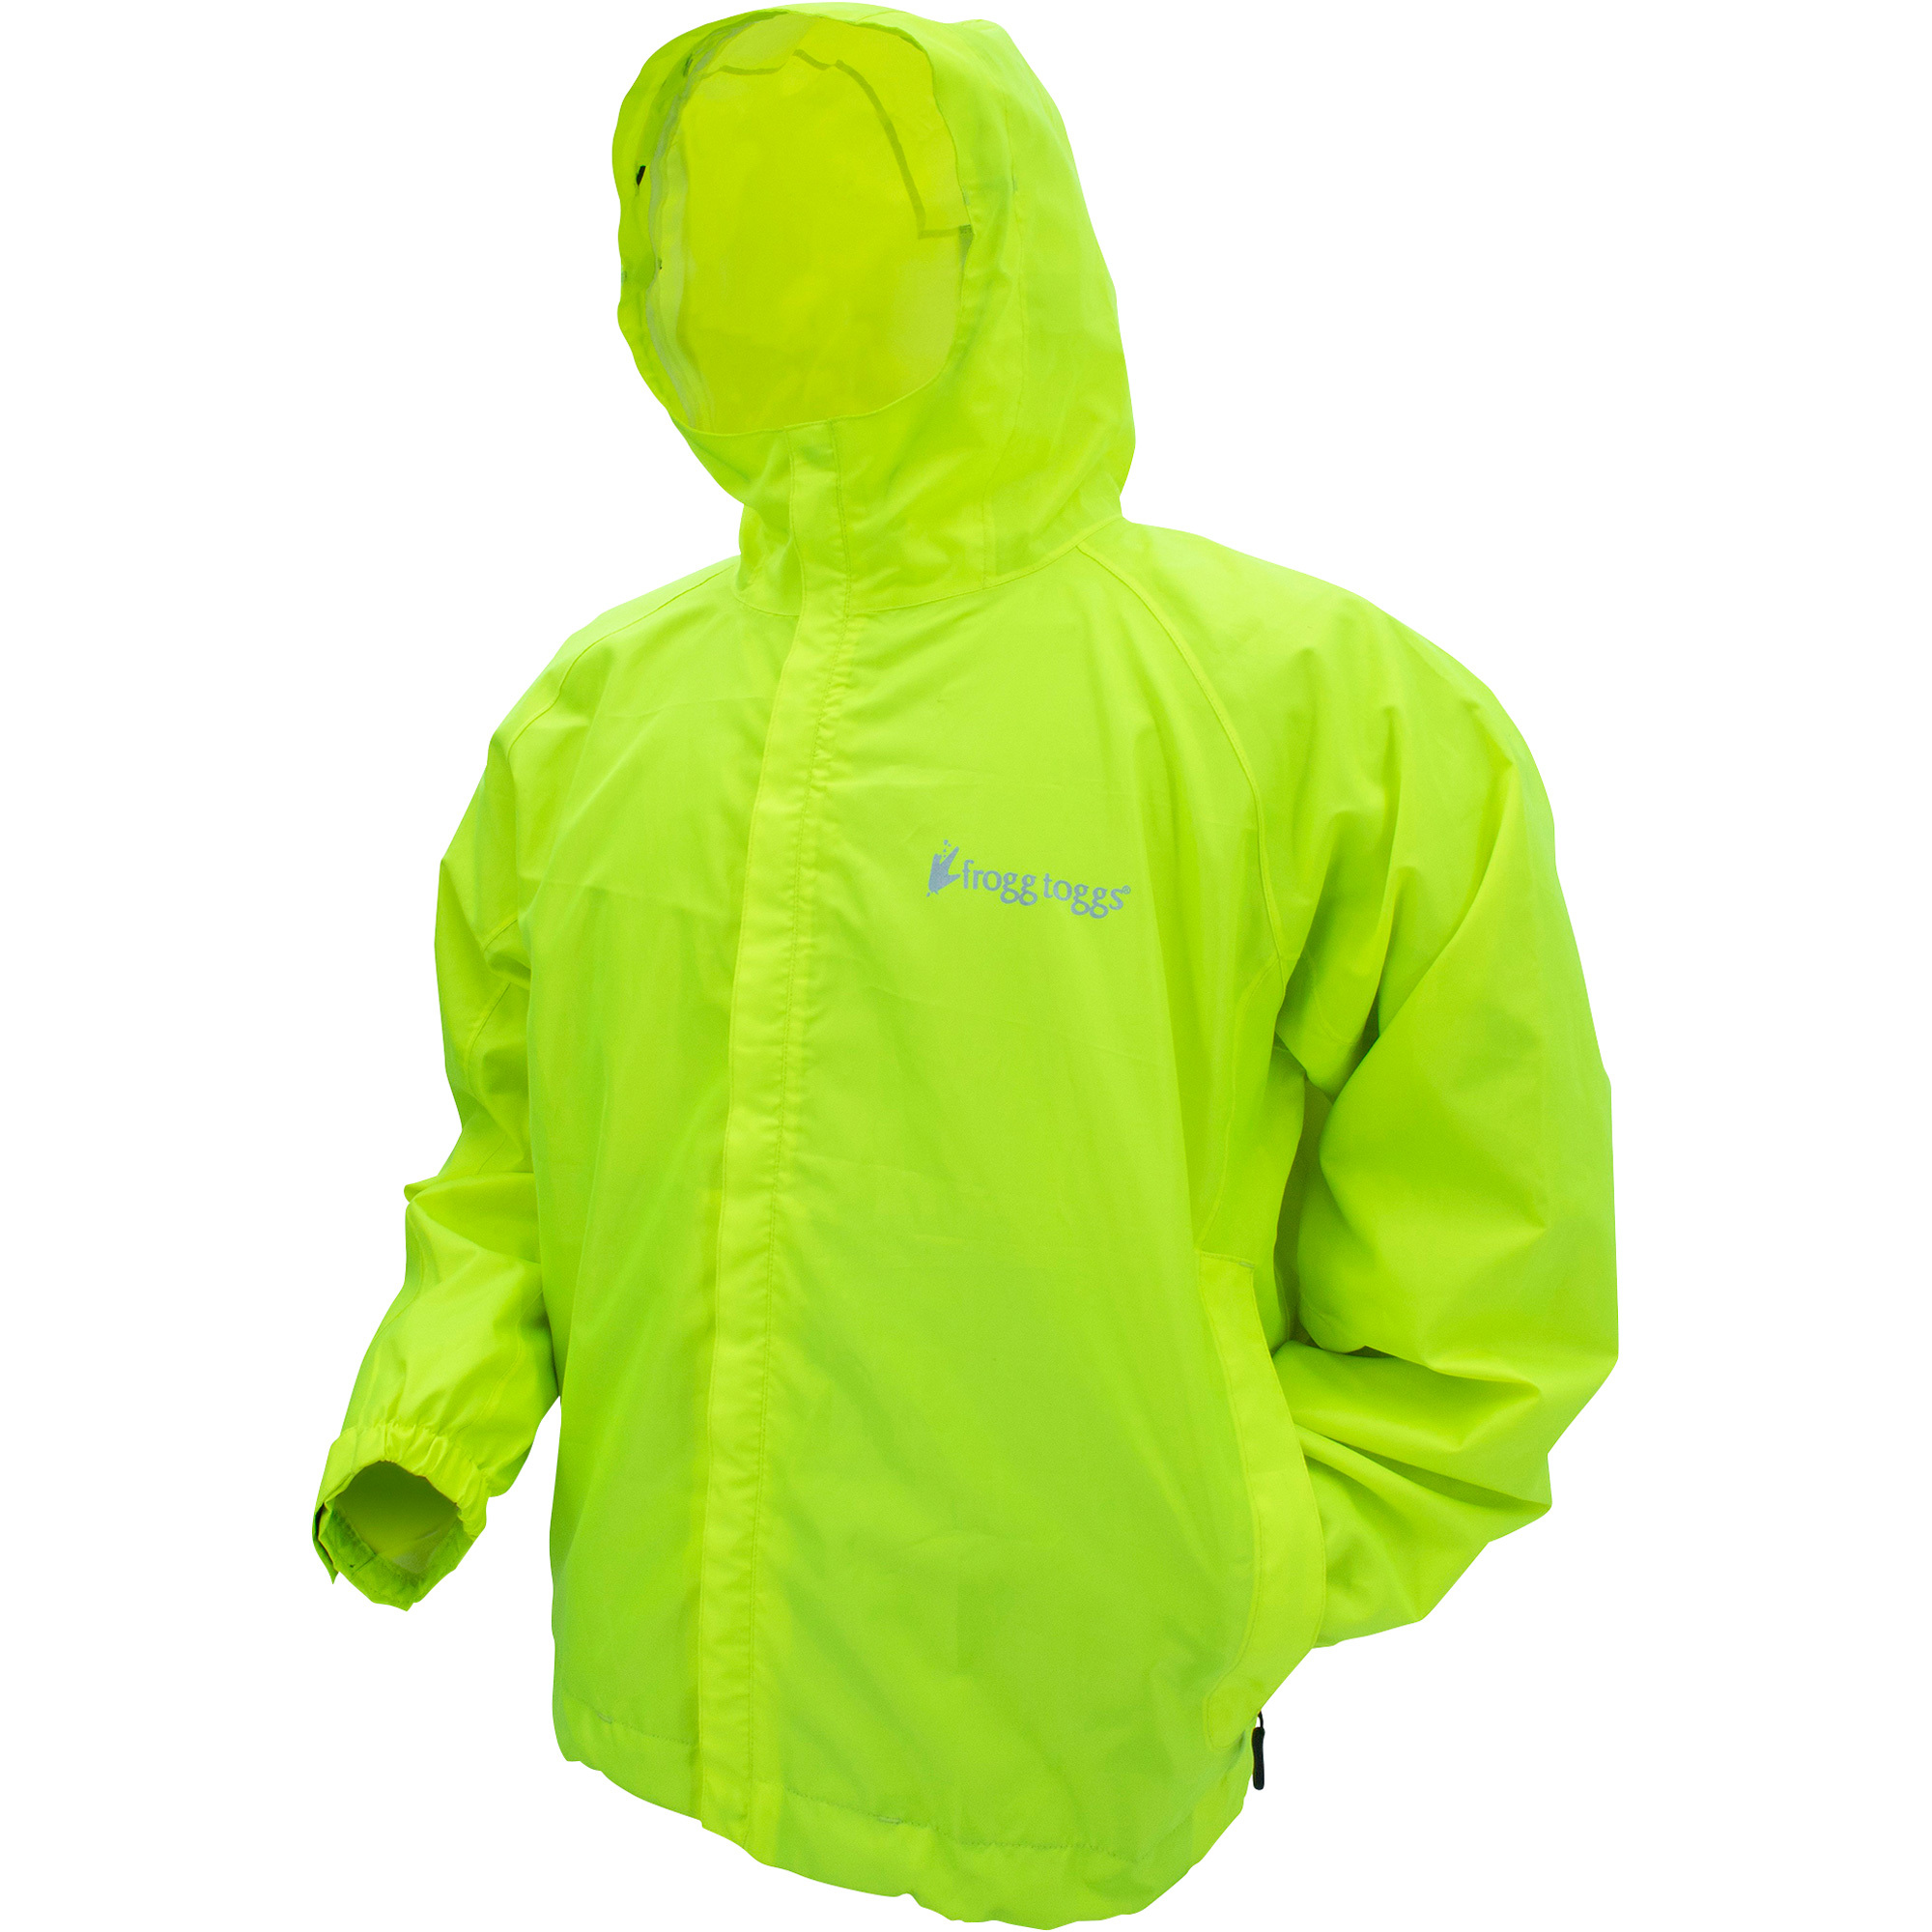 Frogg Toggs Men's Stormwatch Jacket â Lime, 2XL, Model SW62123-482X